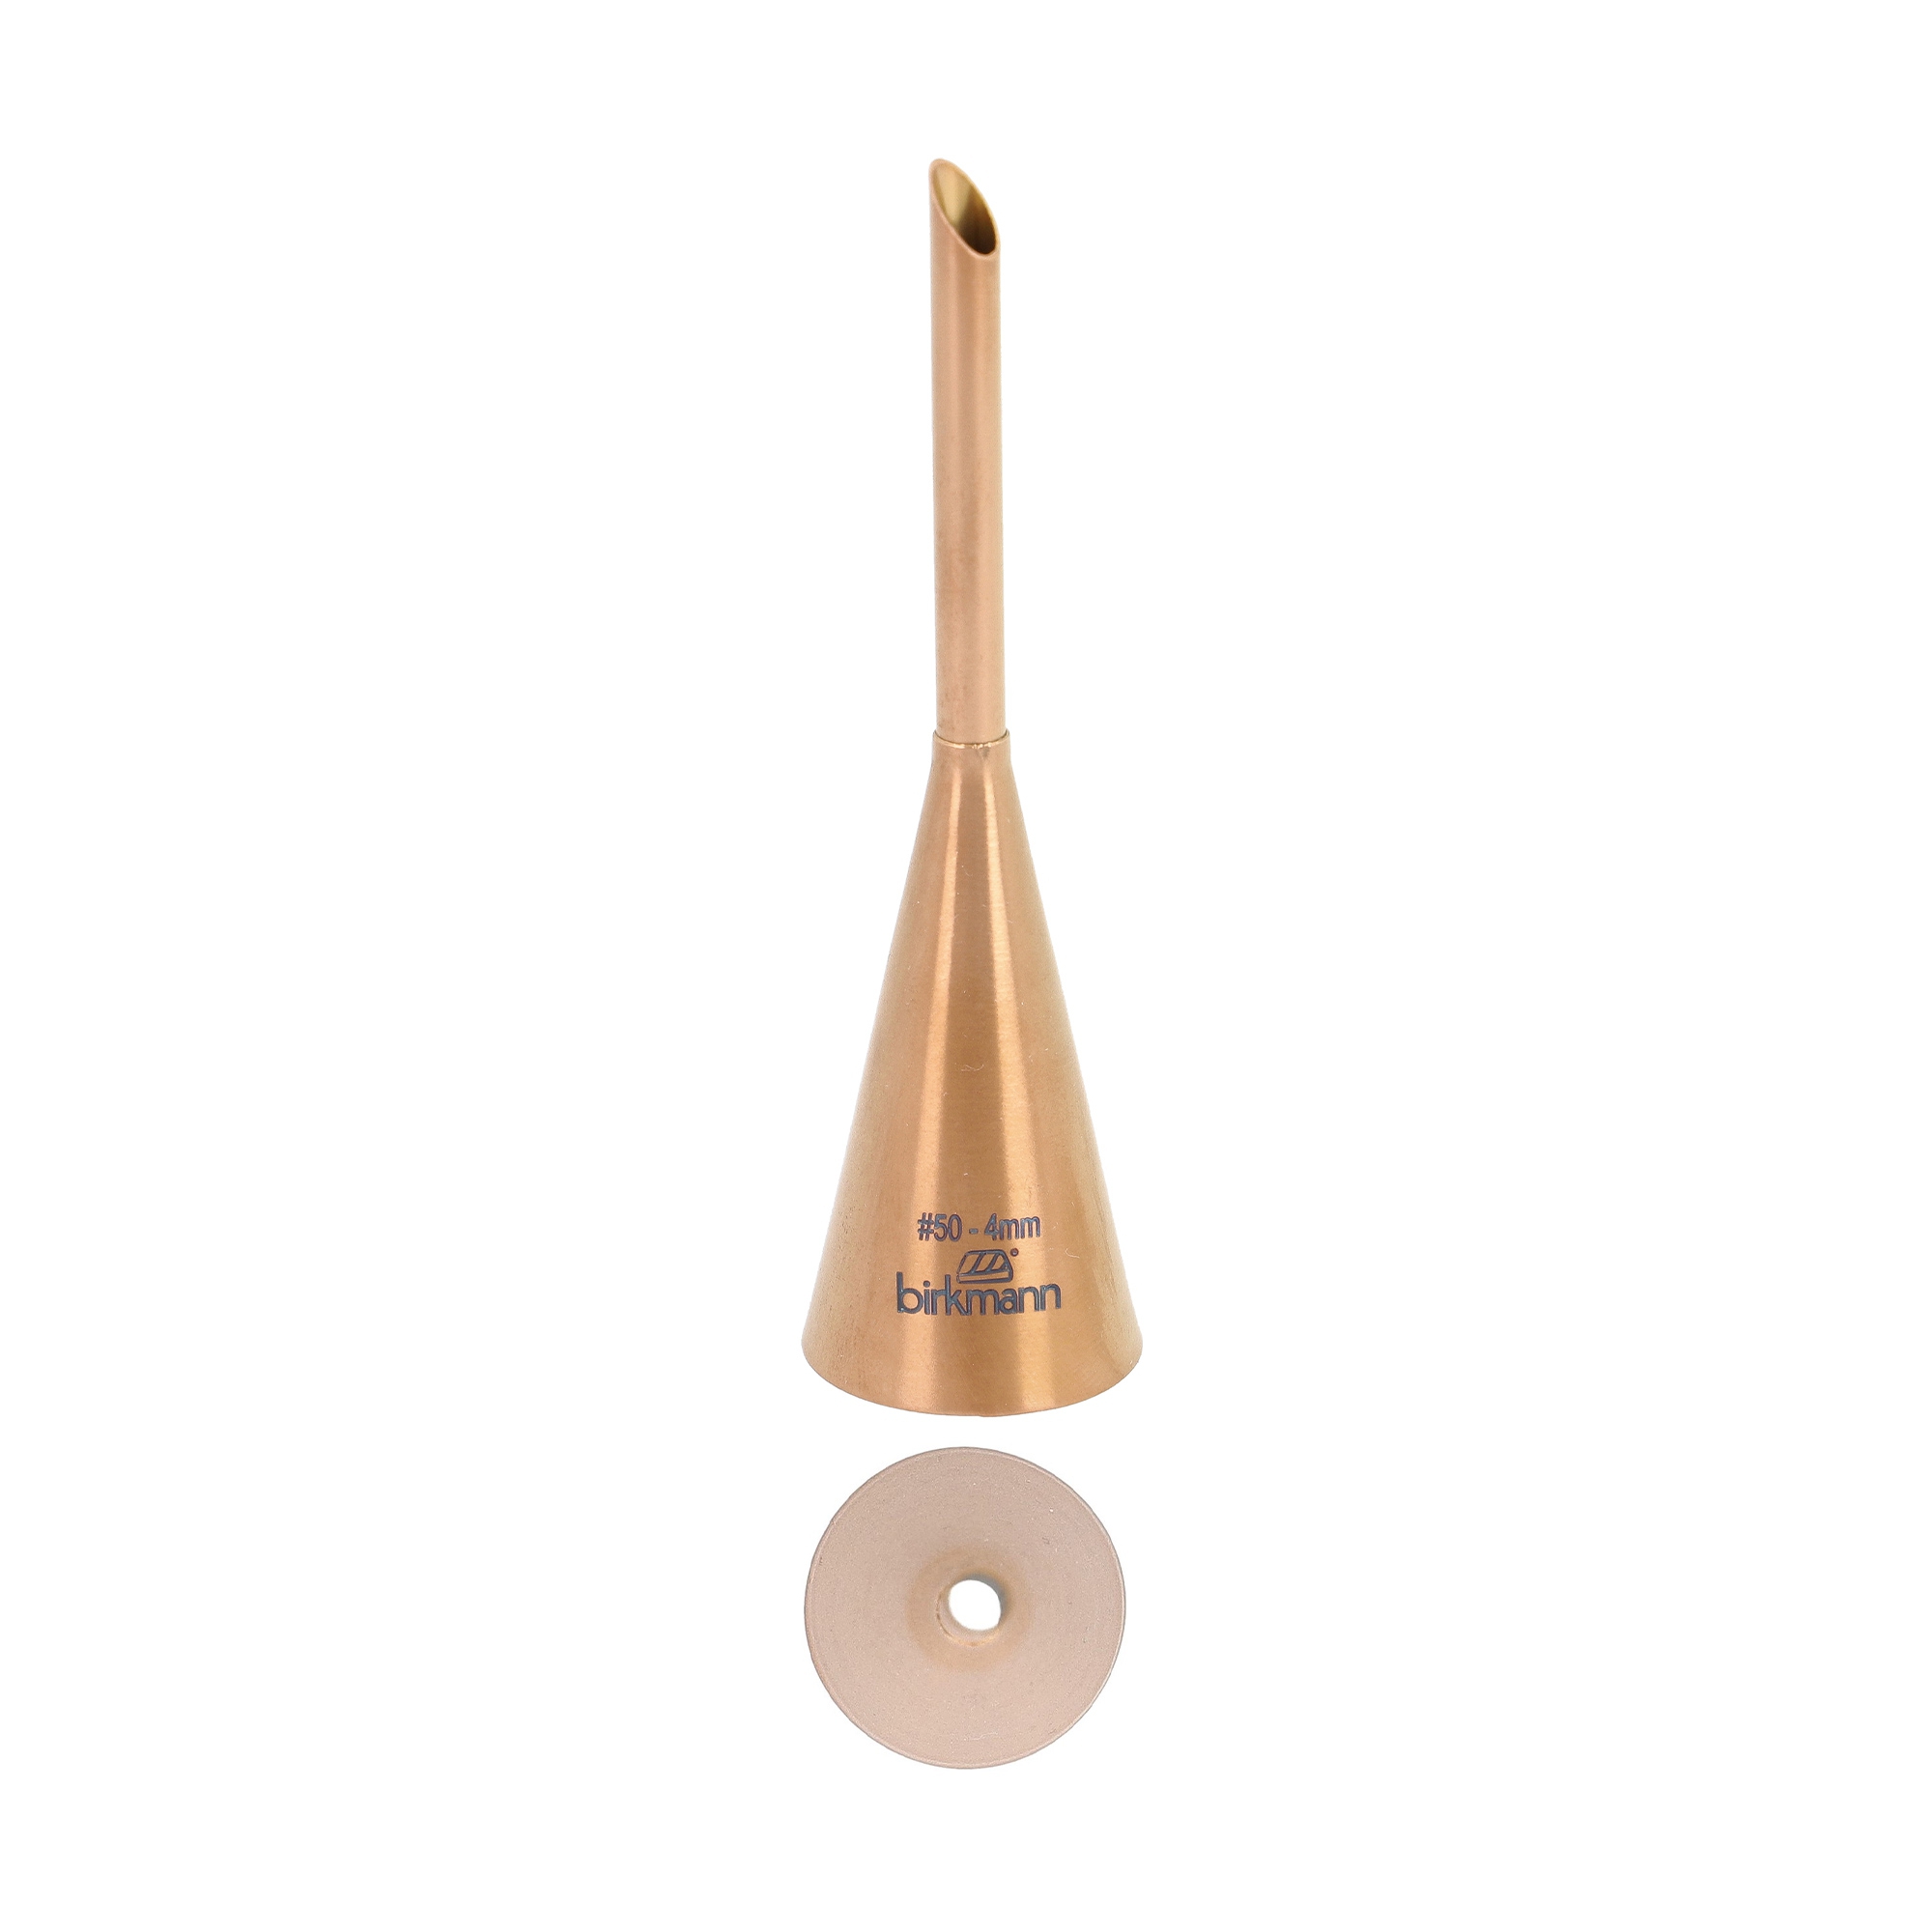 Birkmann - filling nozzle copper colored #50 - 4m